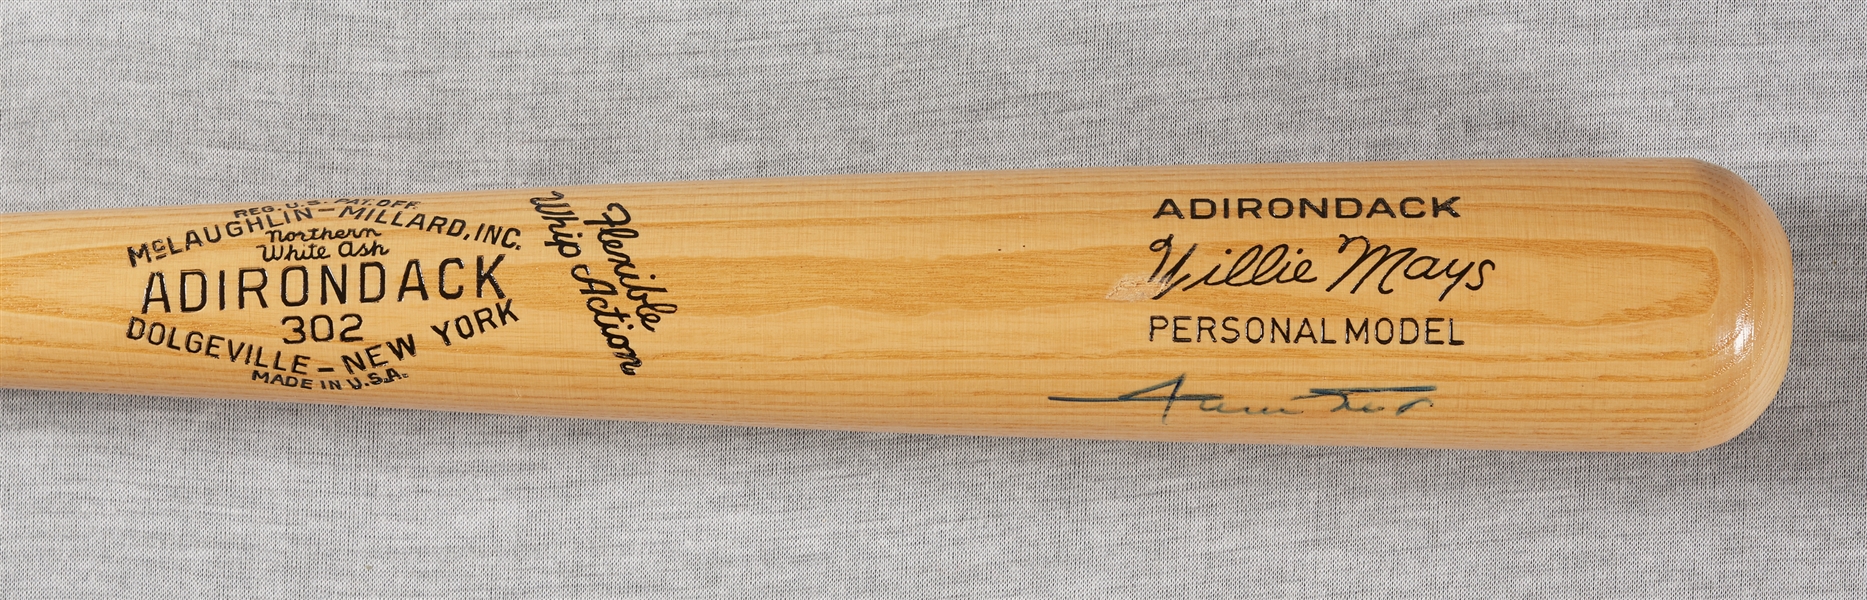 Willie Mays Signed Adirondack Bat (PSA/DNA)